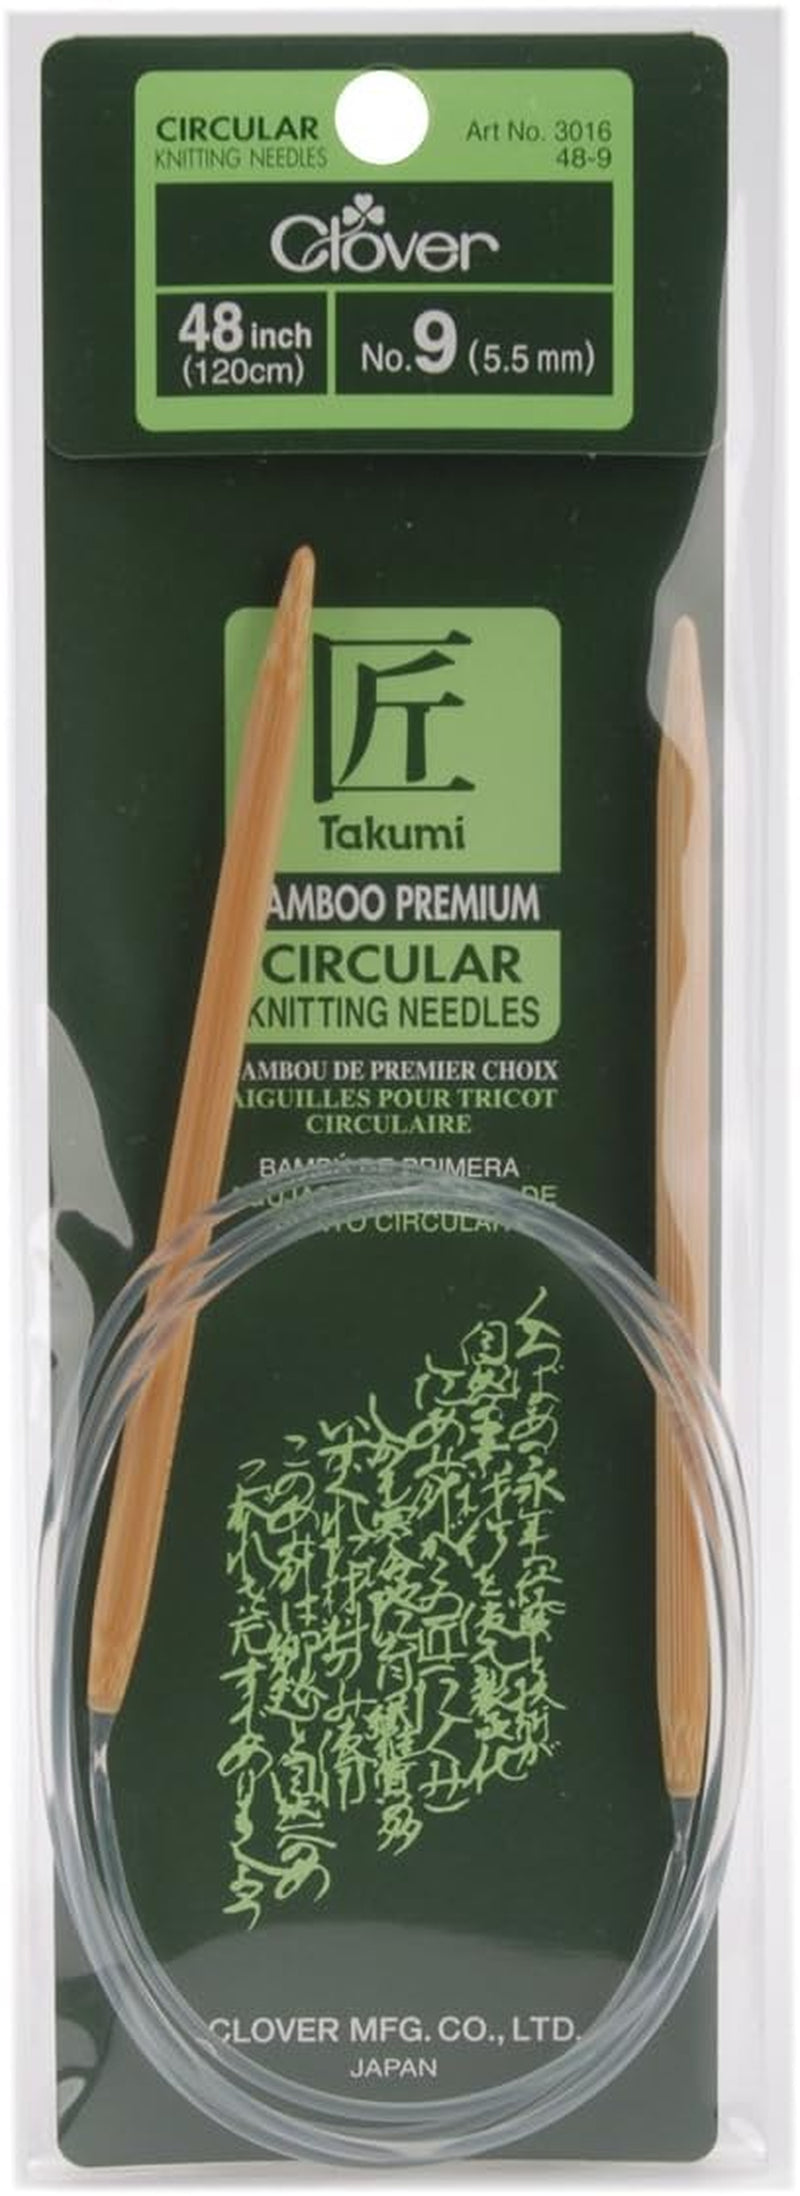 Takumi Bamboo Circular 48-Inch Knitting Needles, Size 10